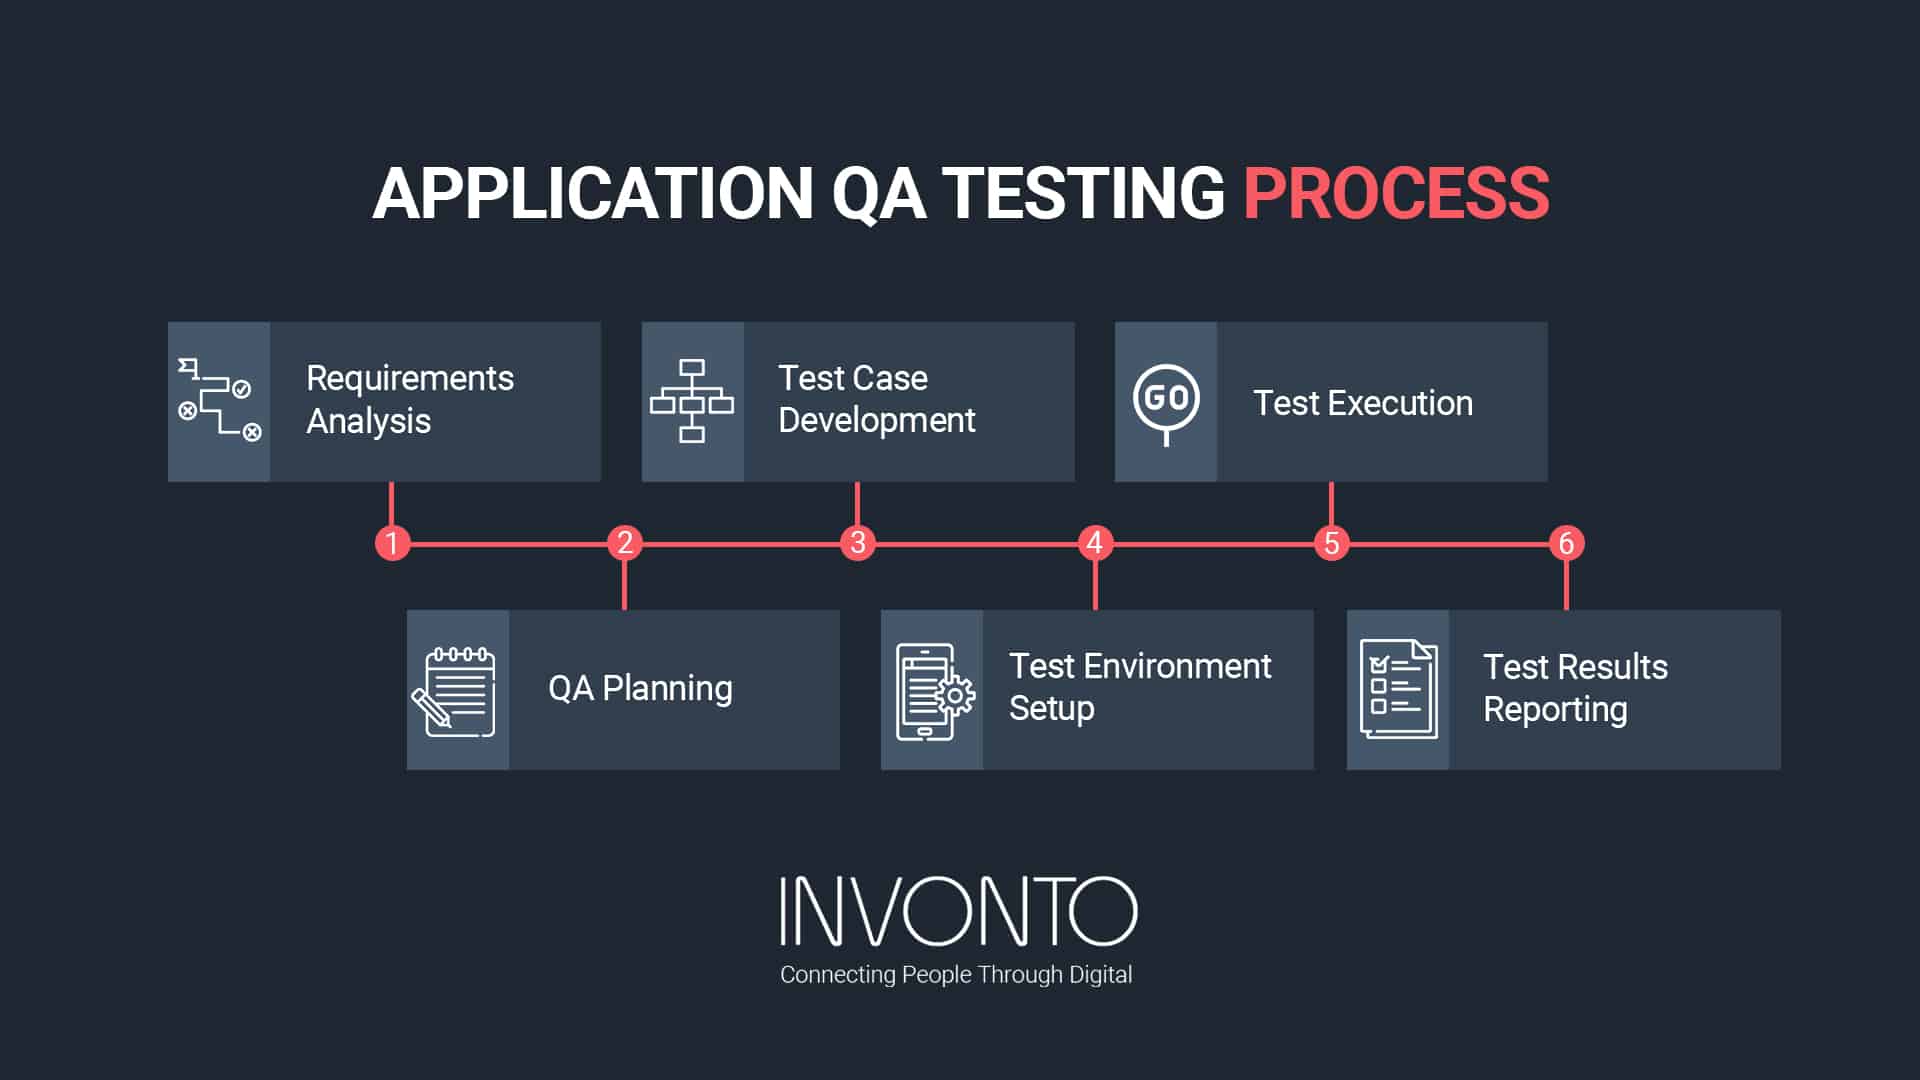 Invonto's QA Software Testing Process graphic